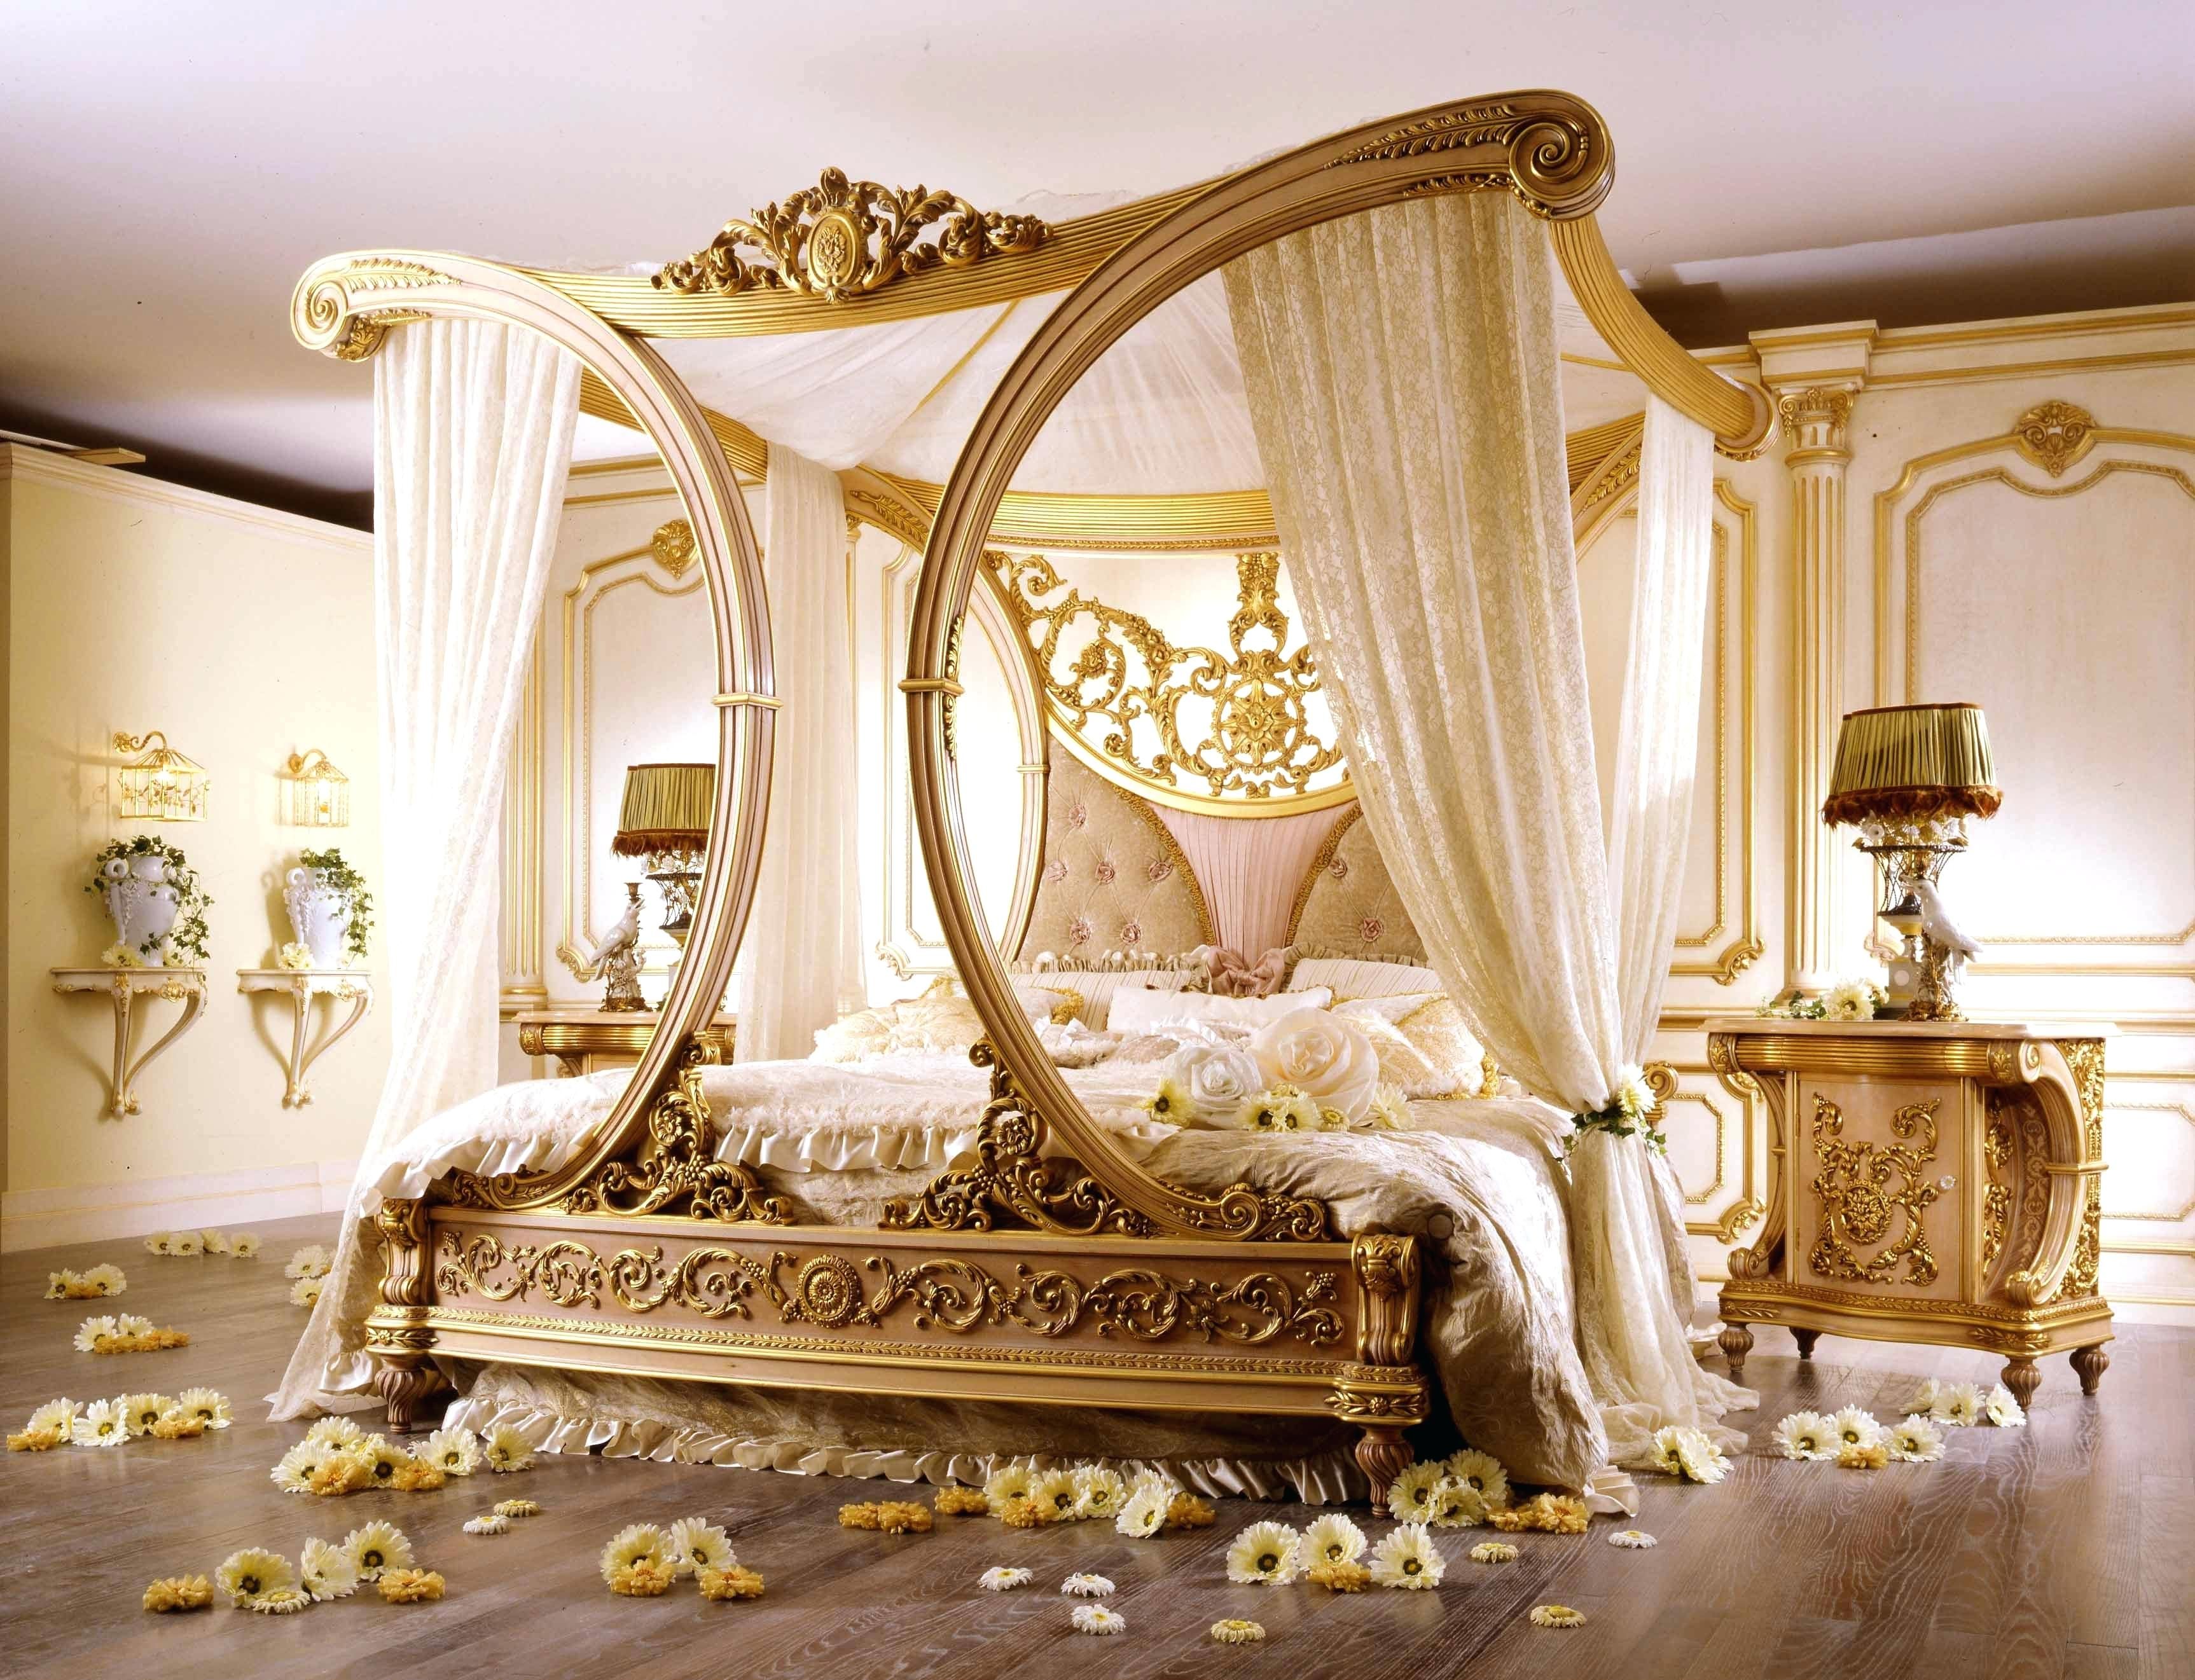 Luxurious Bedroom Furniture Options